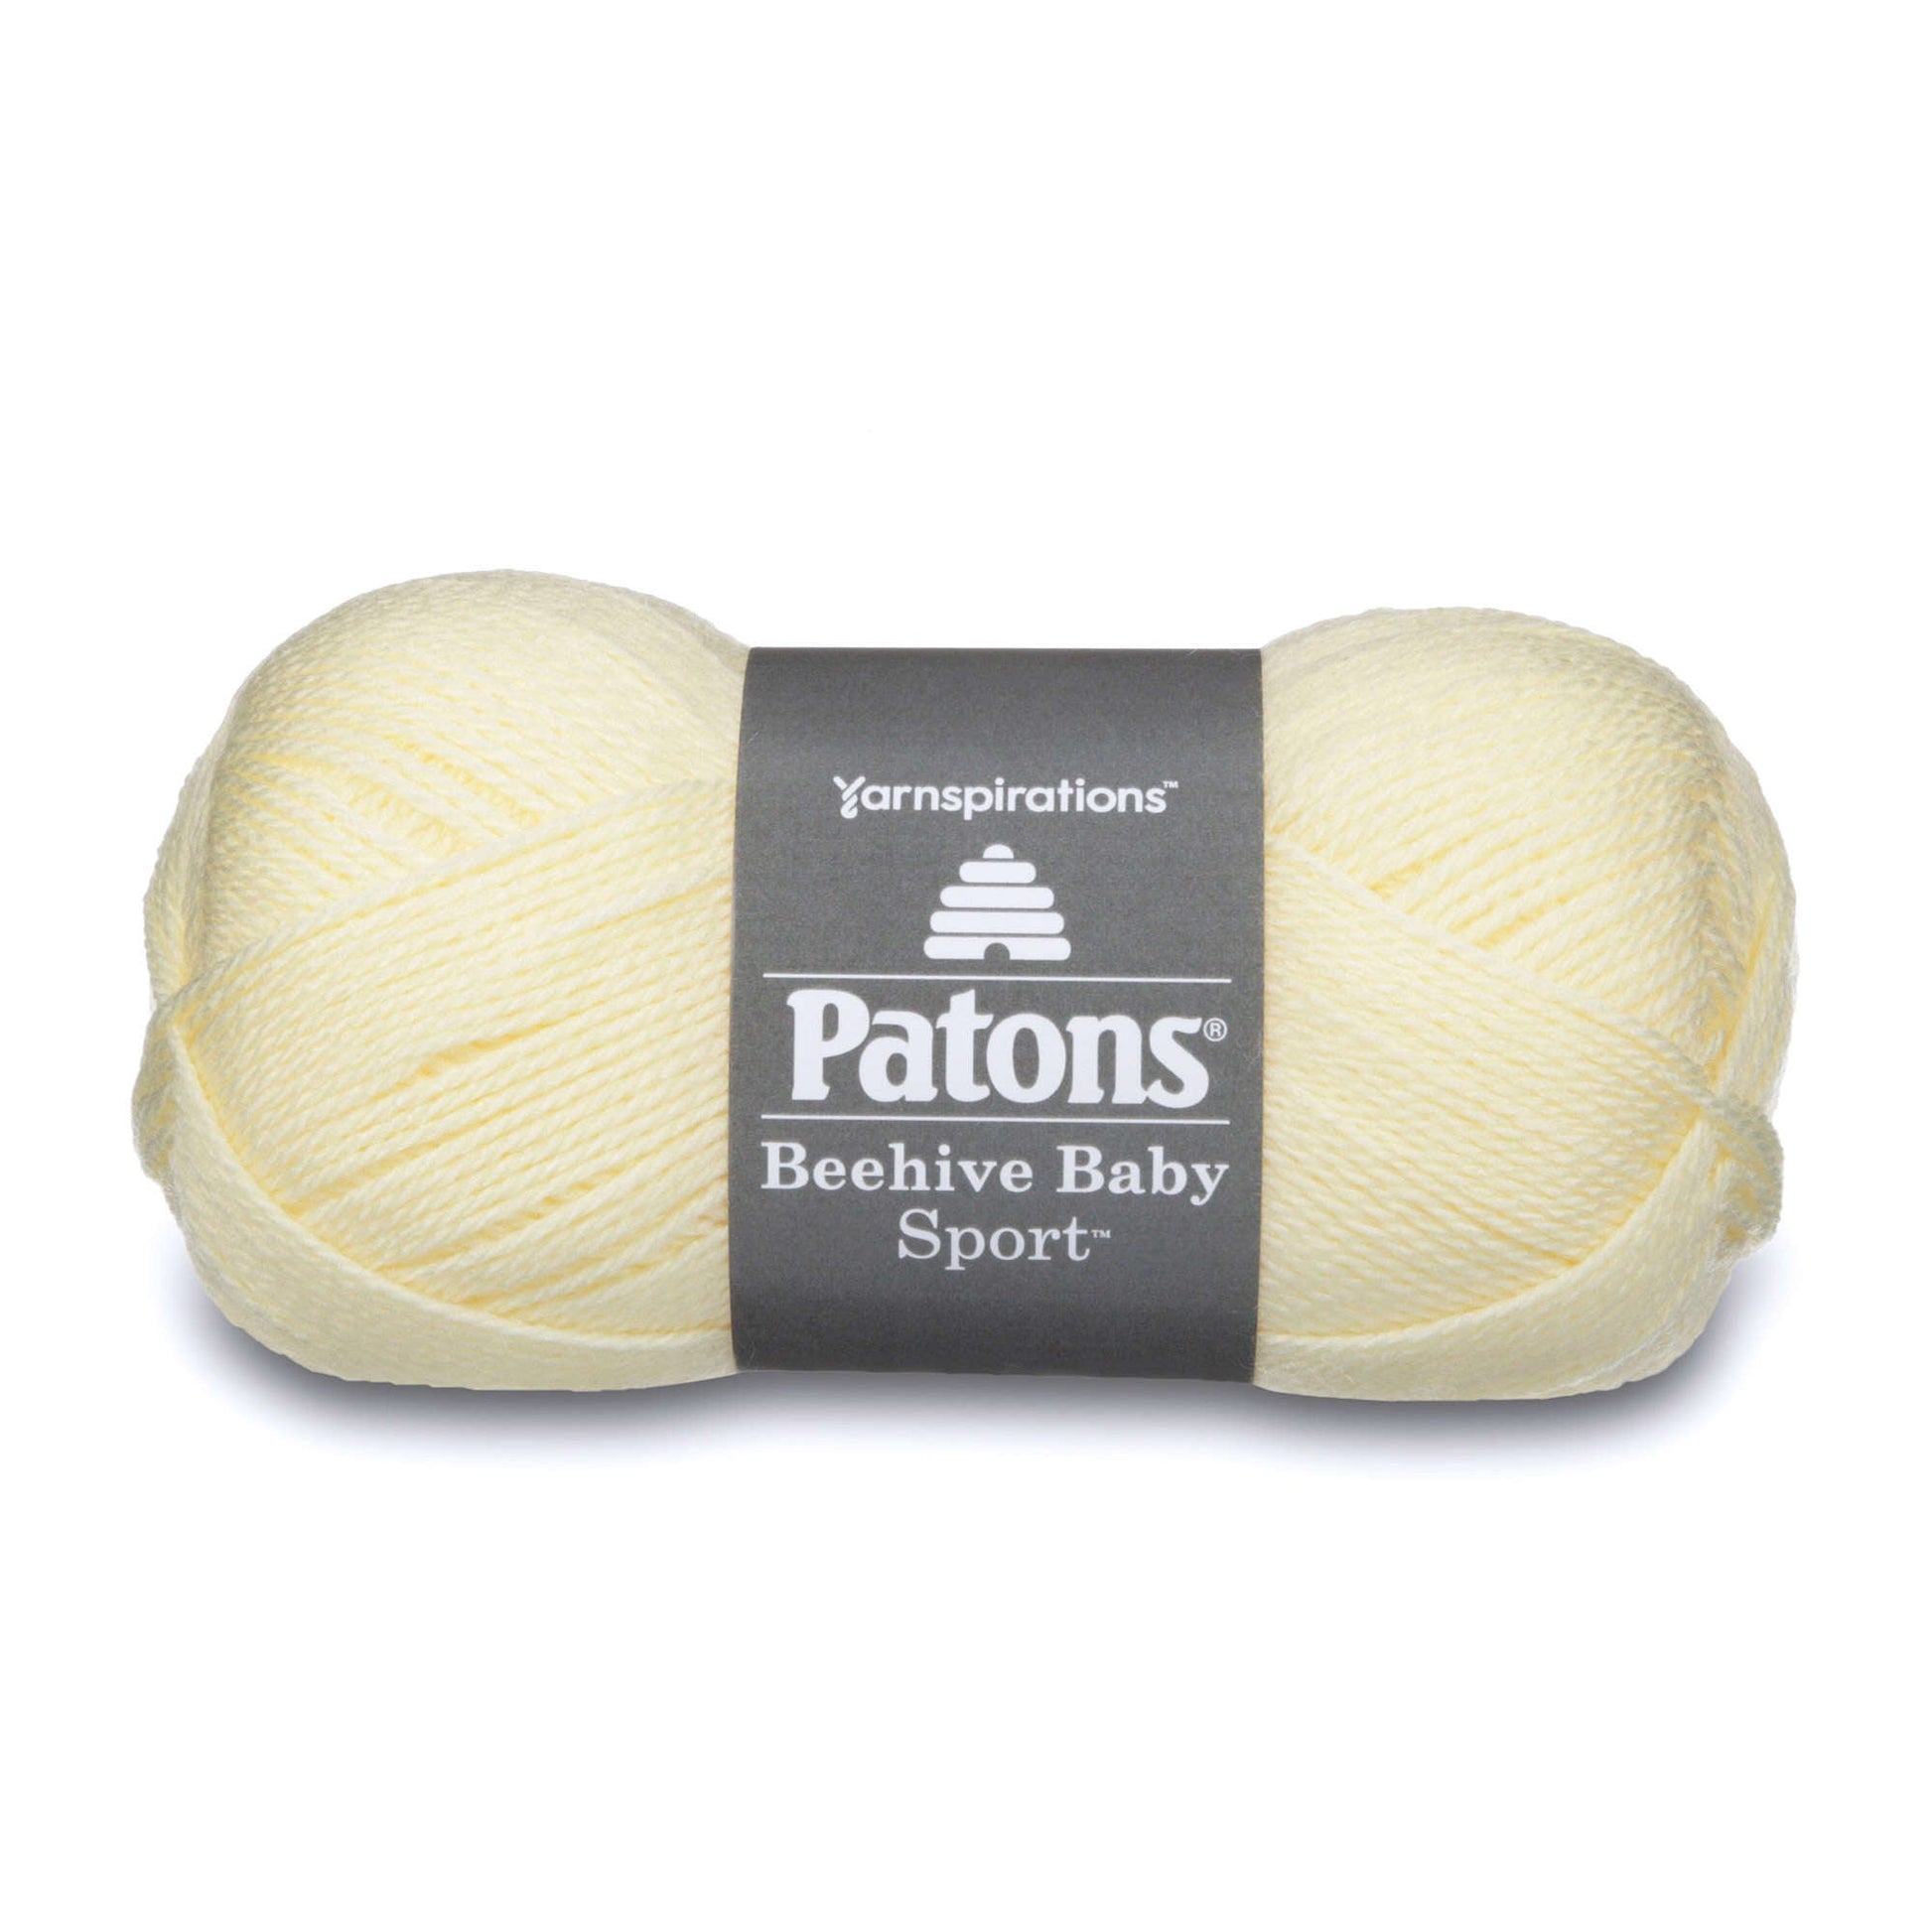 Patons Beehive Baby Sport Yarn